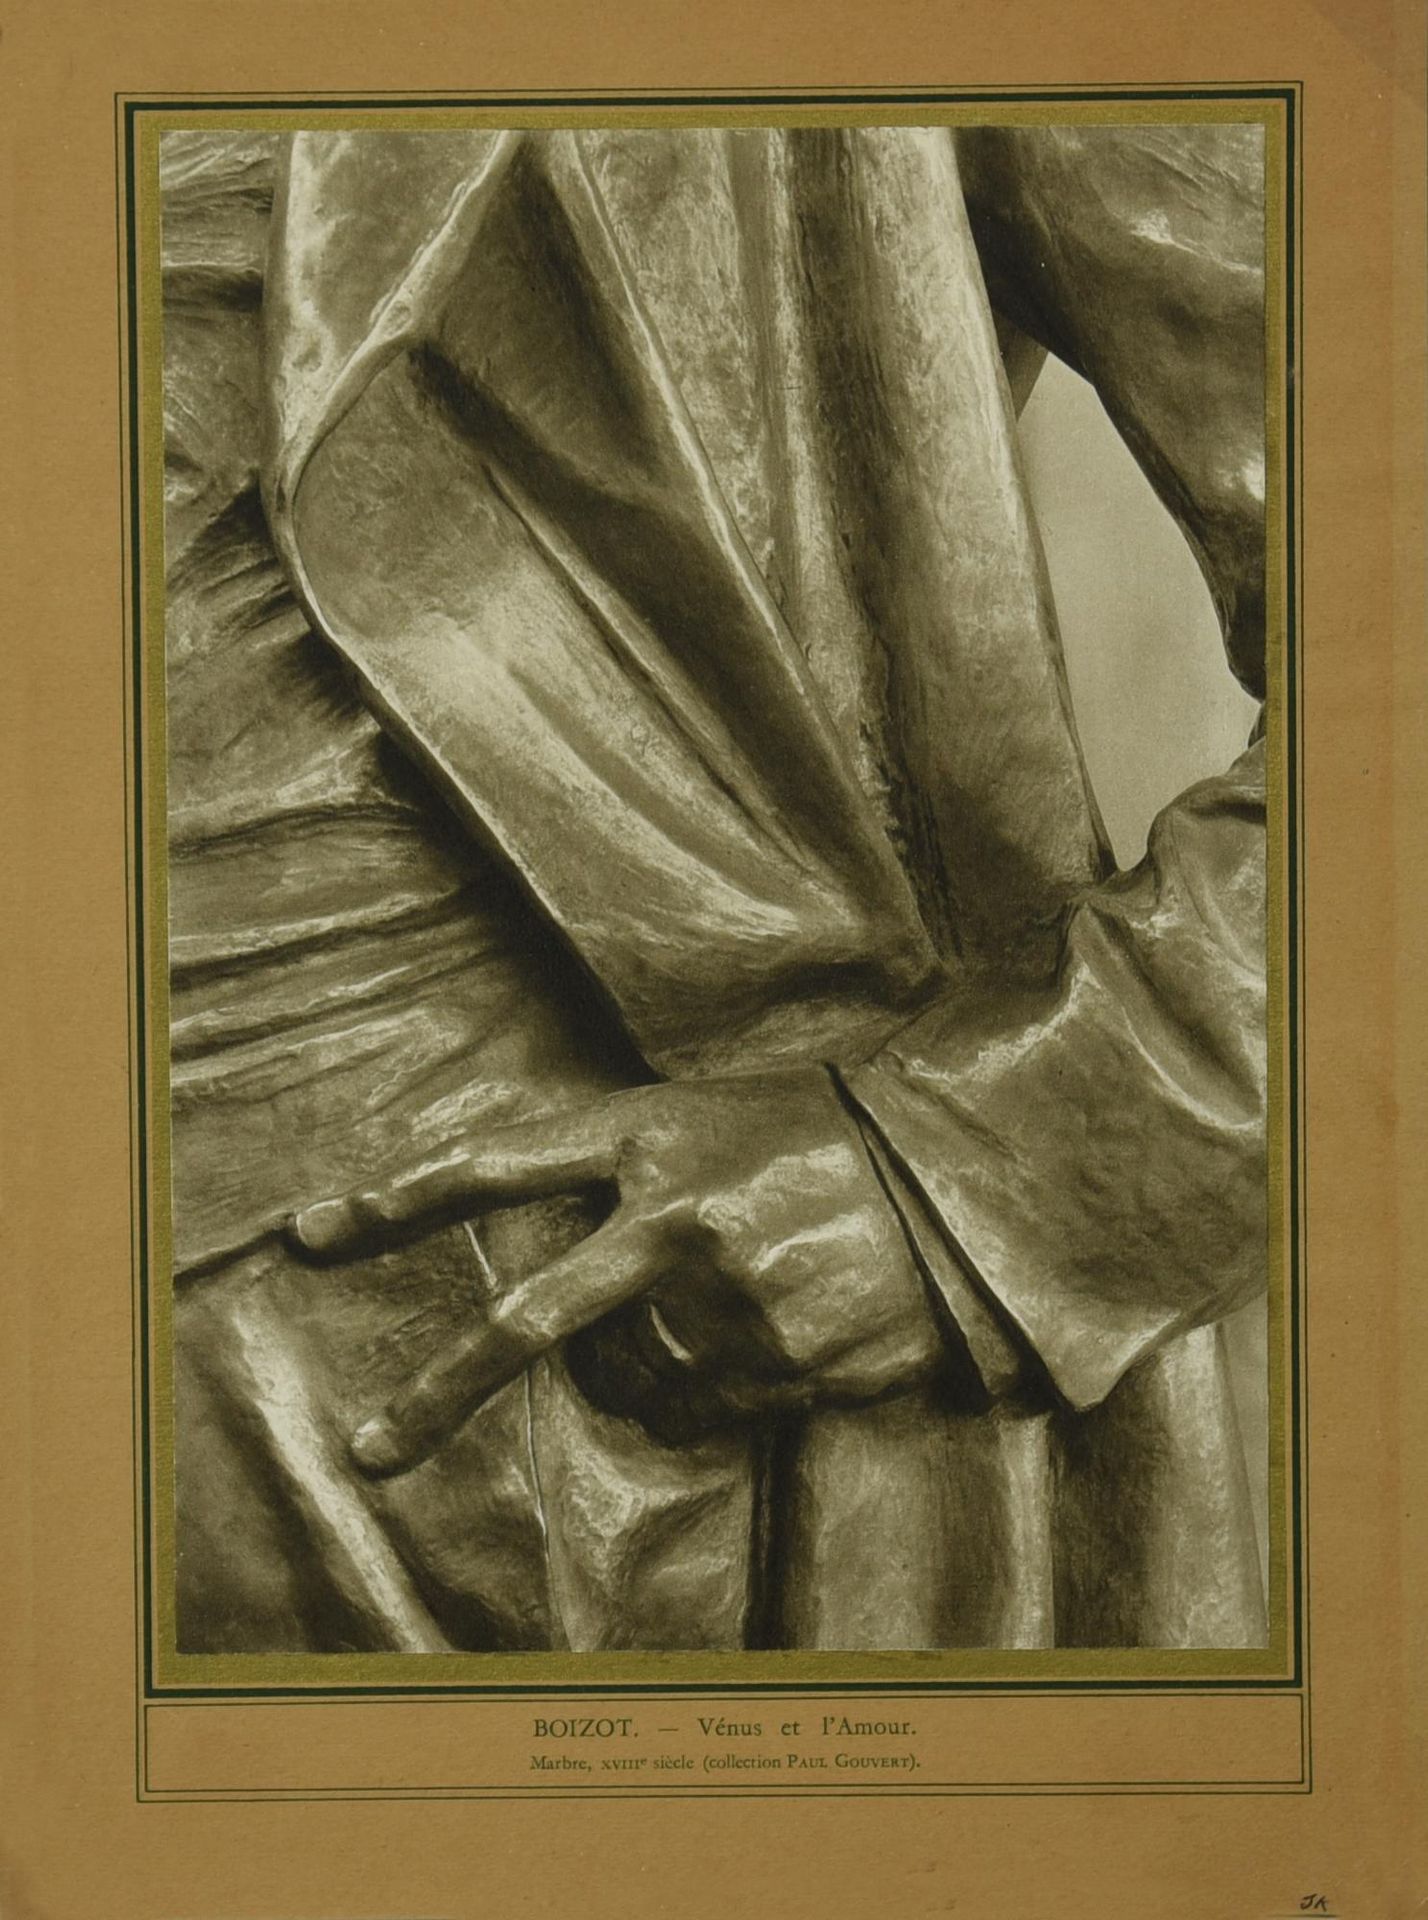 Jiri Kolar Jiri Kolar

BOIZOT VENUS ET L'AMOUR

collage sur papier, 26,7x36 cm

&hellip;